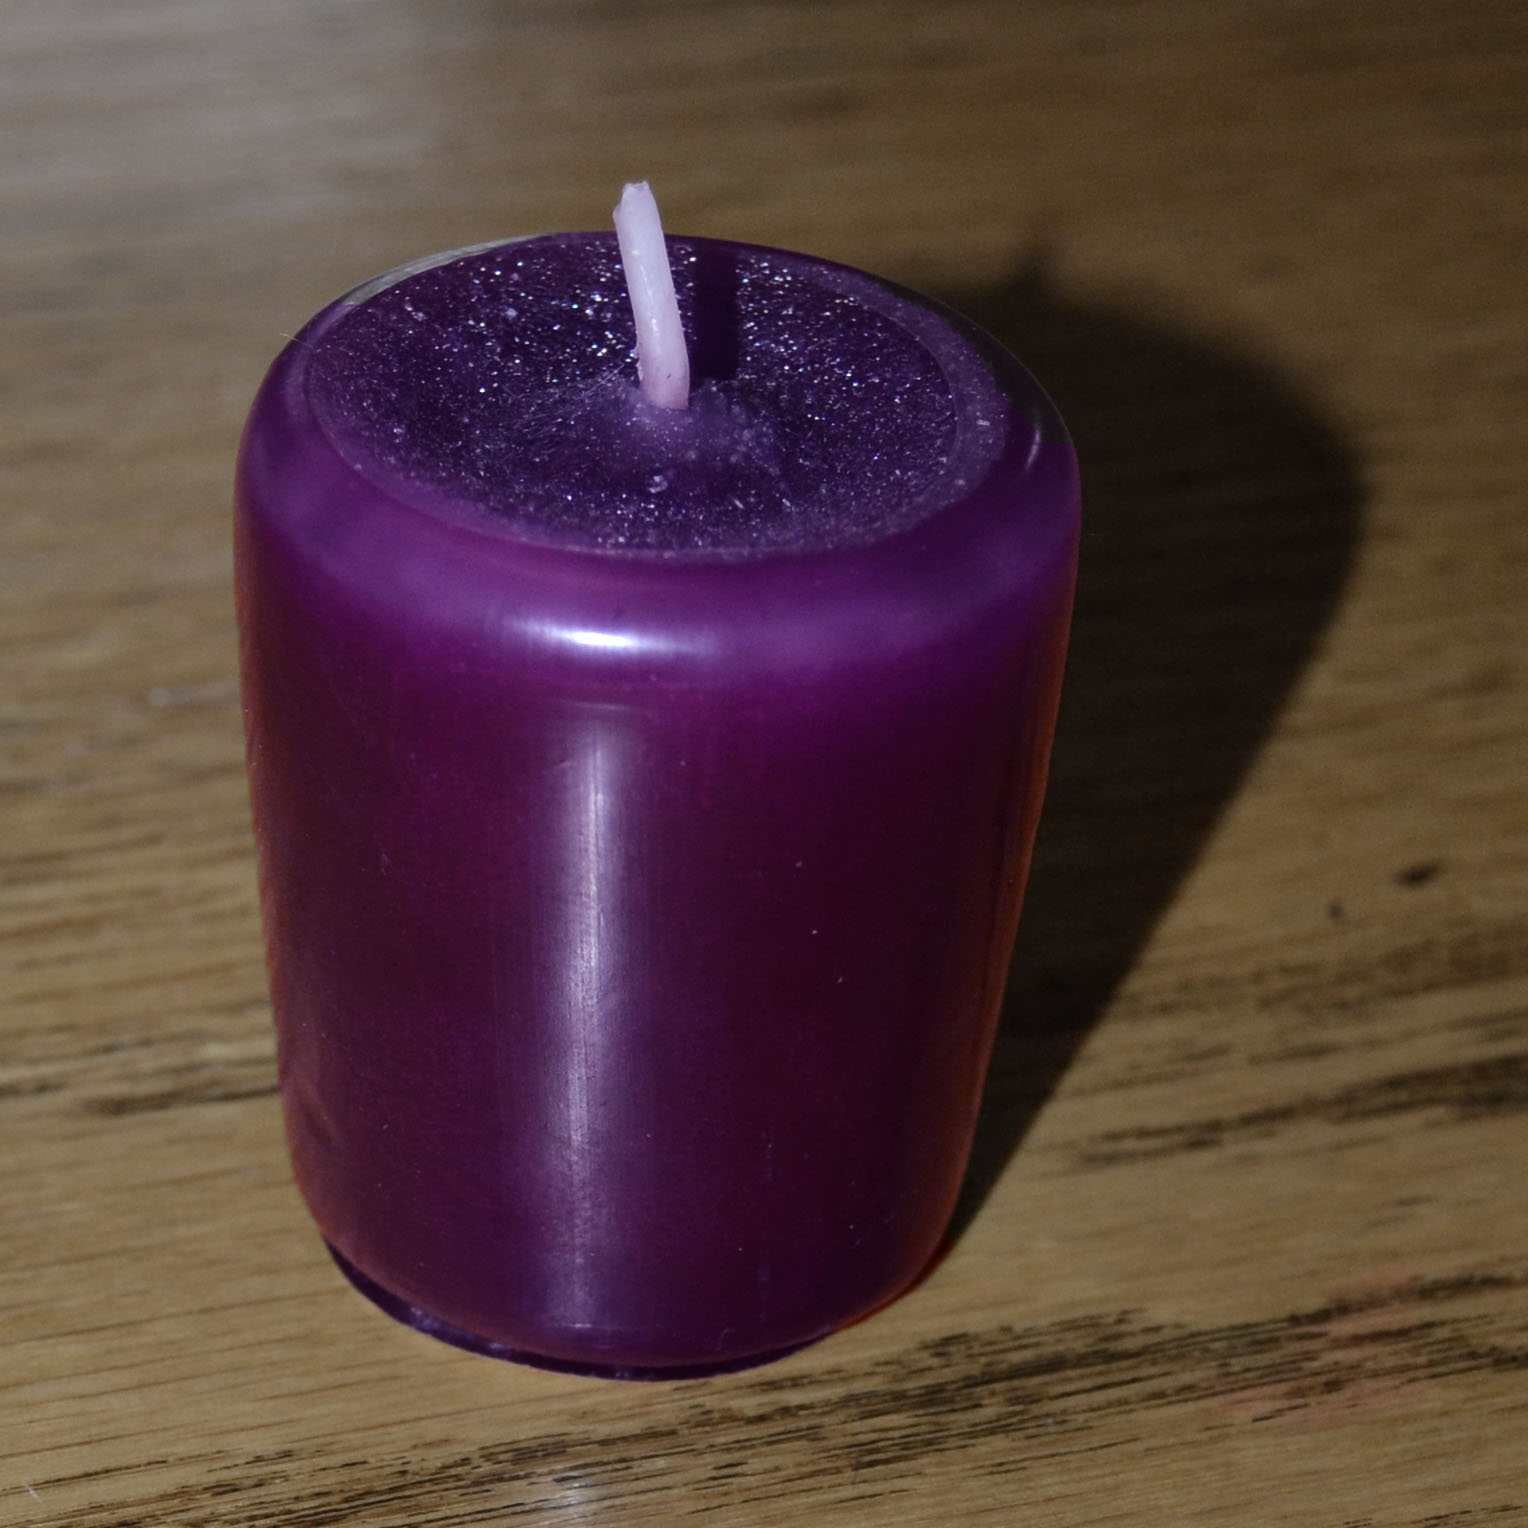 Purple candle